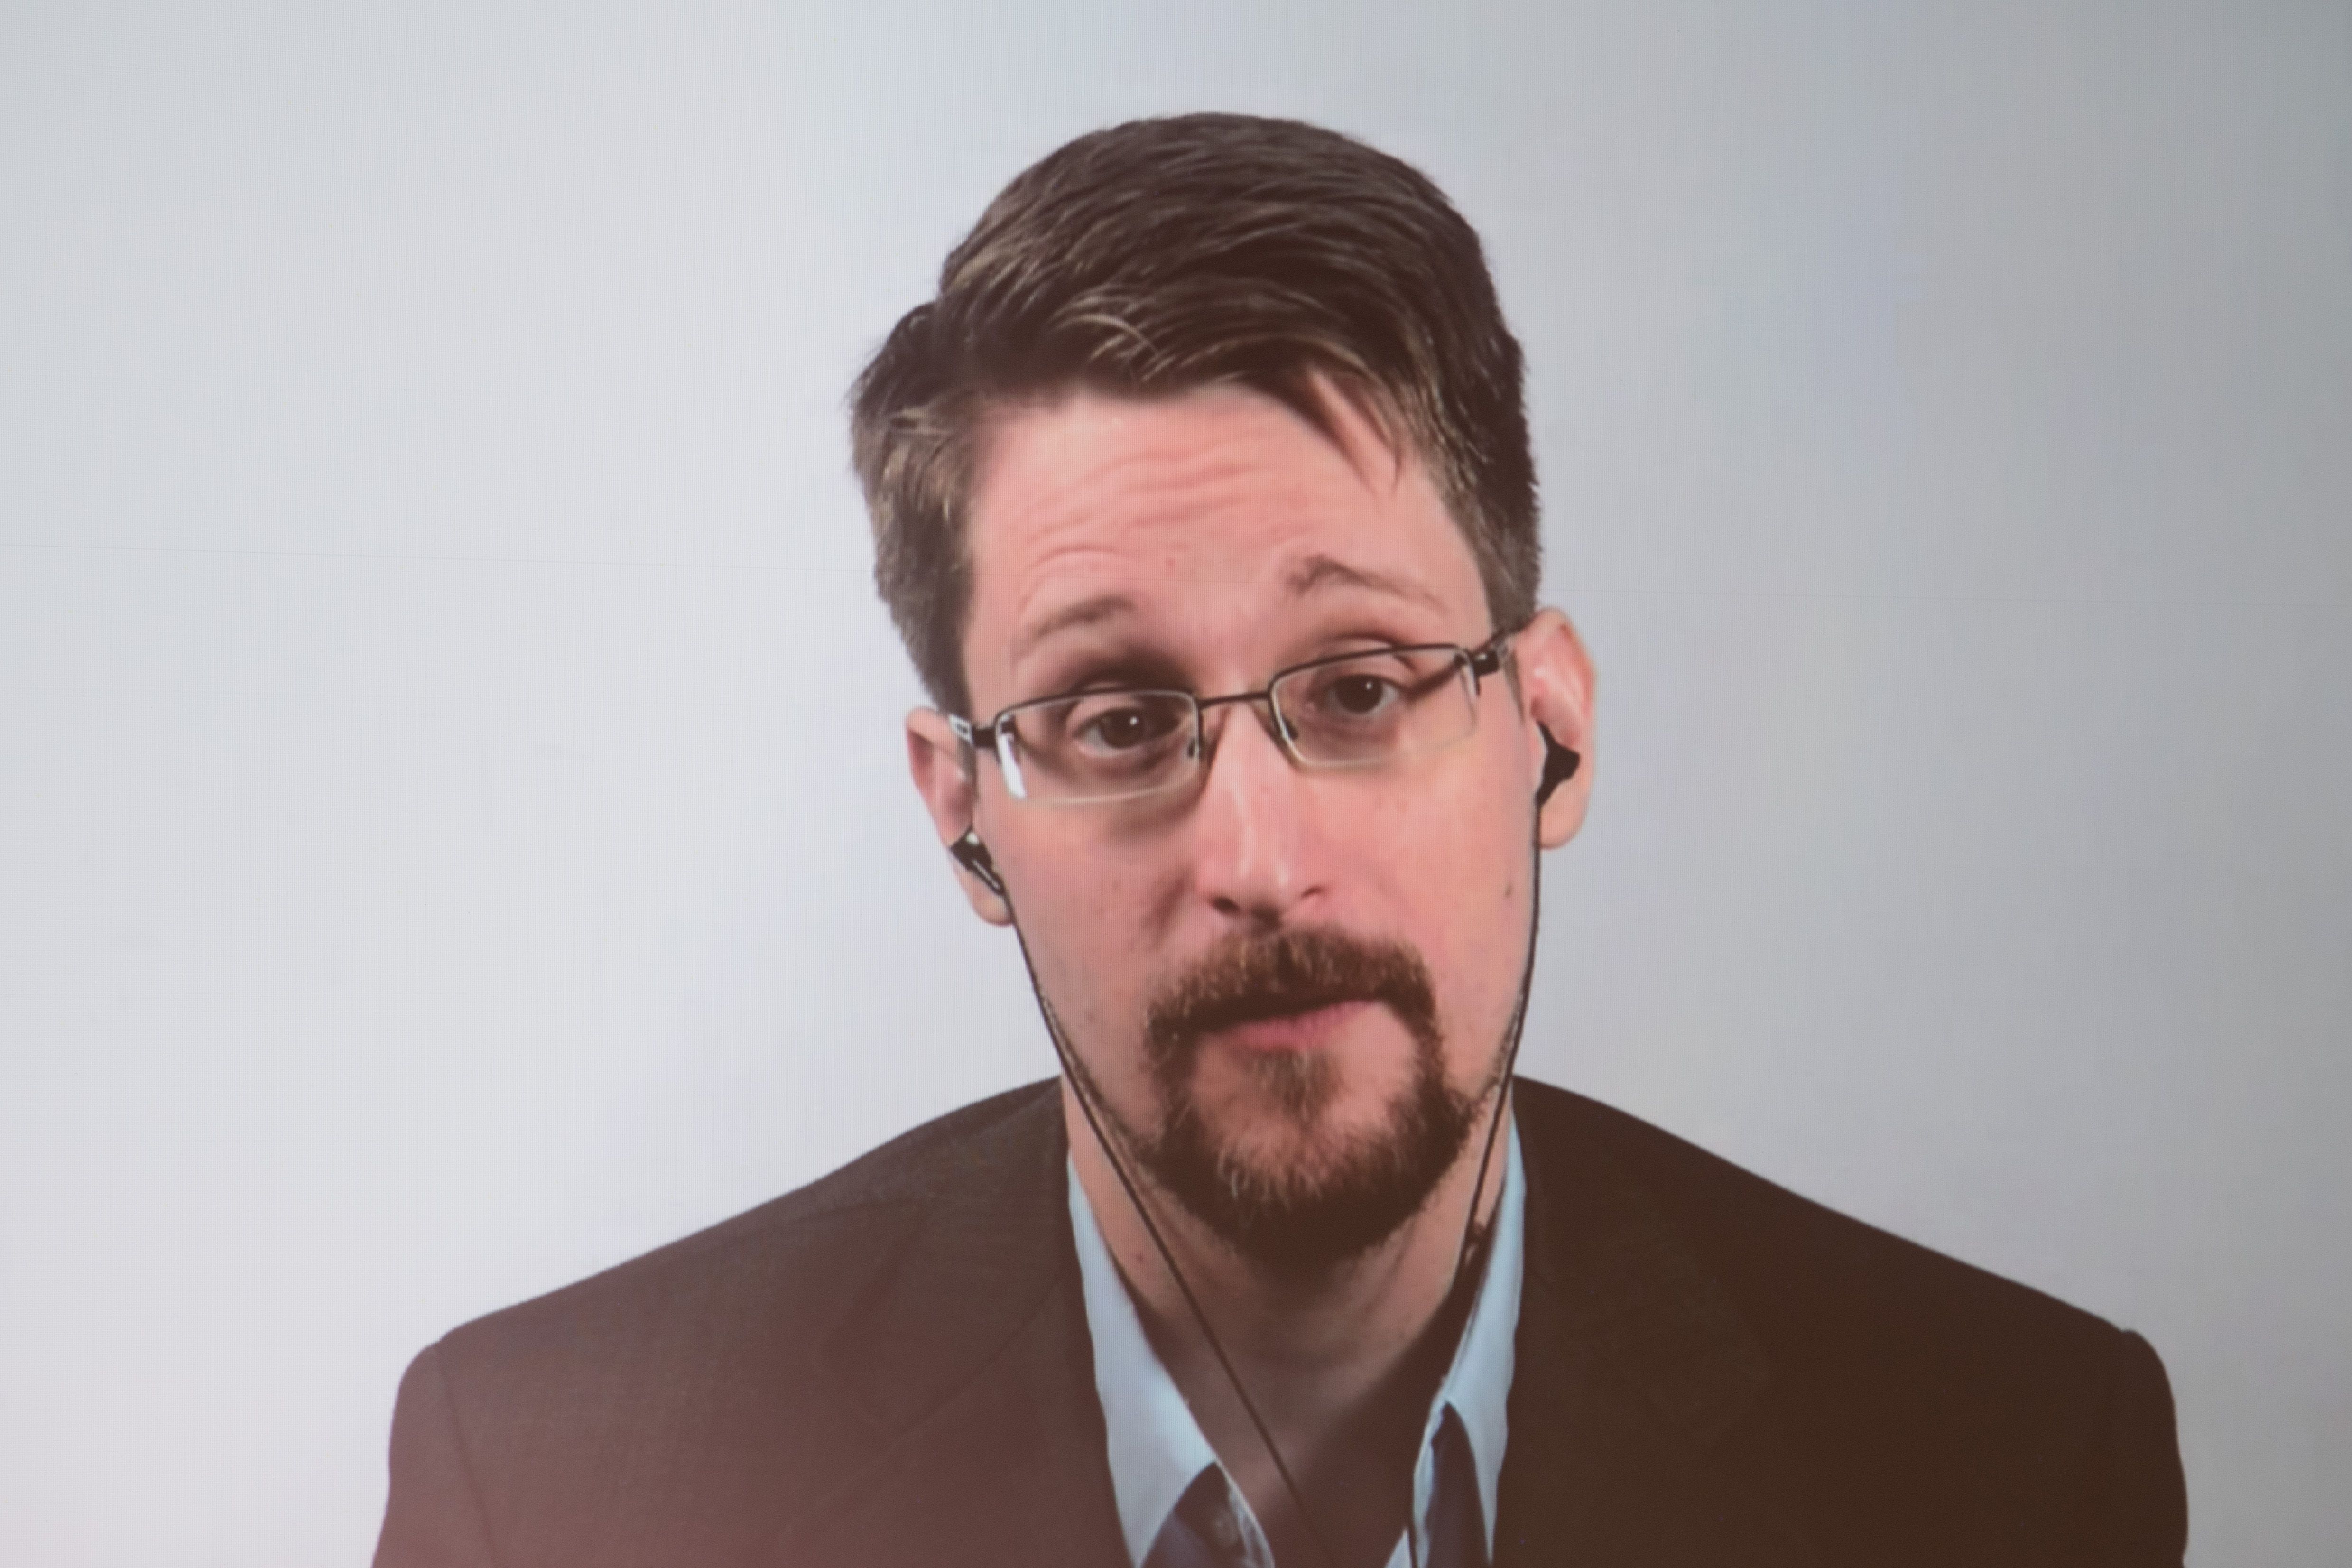 Edward Snowden In A Brown Suit